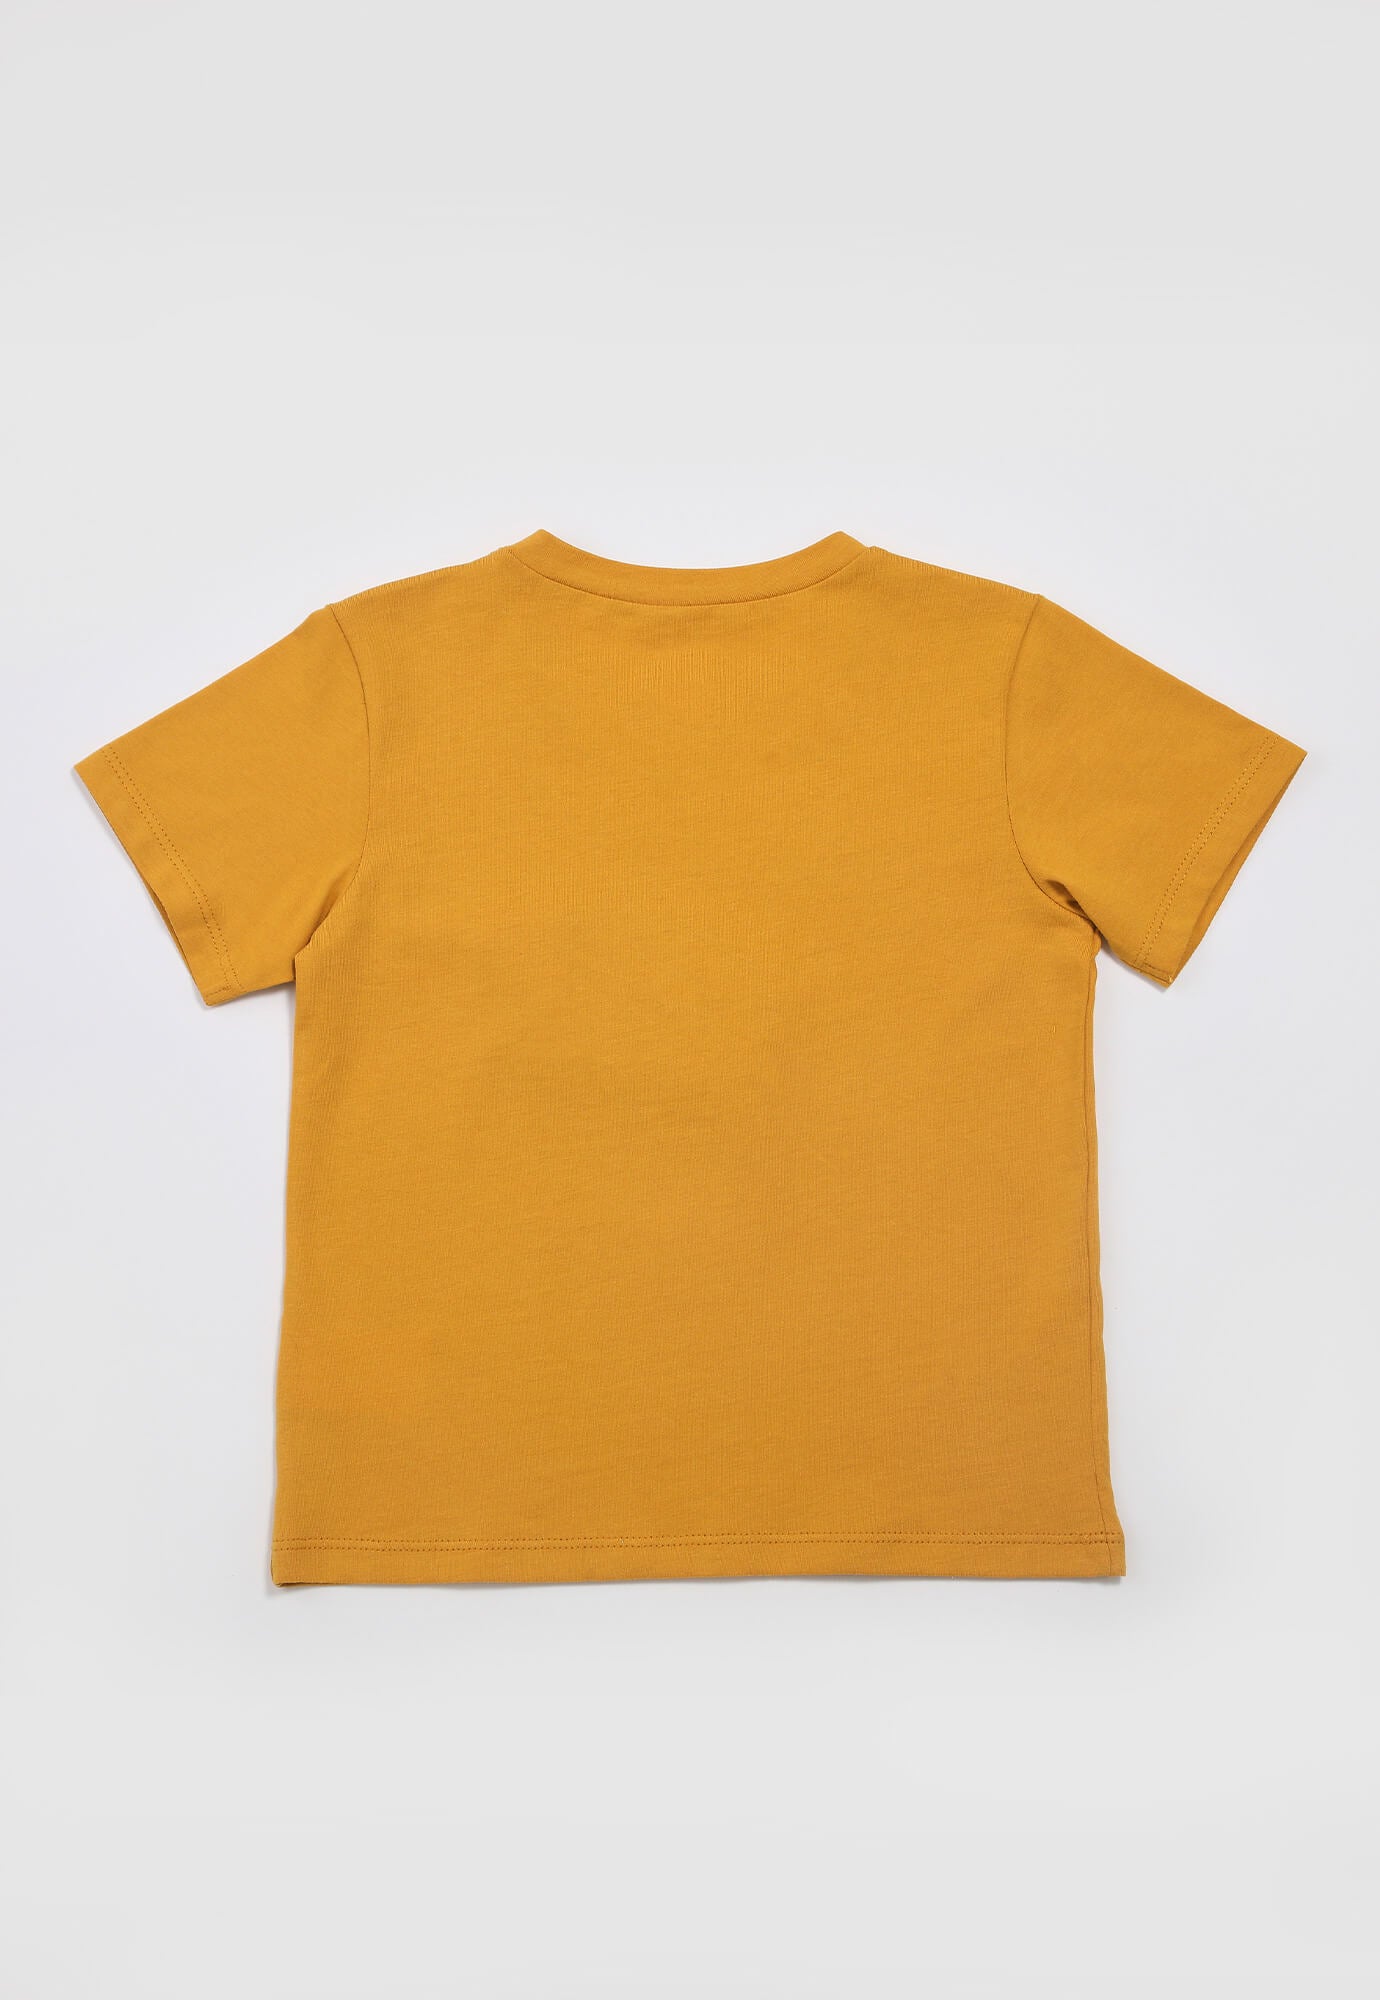 Camiseta amarilla estampada para bebé niño